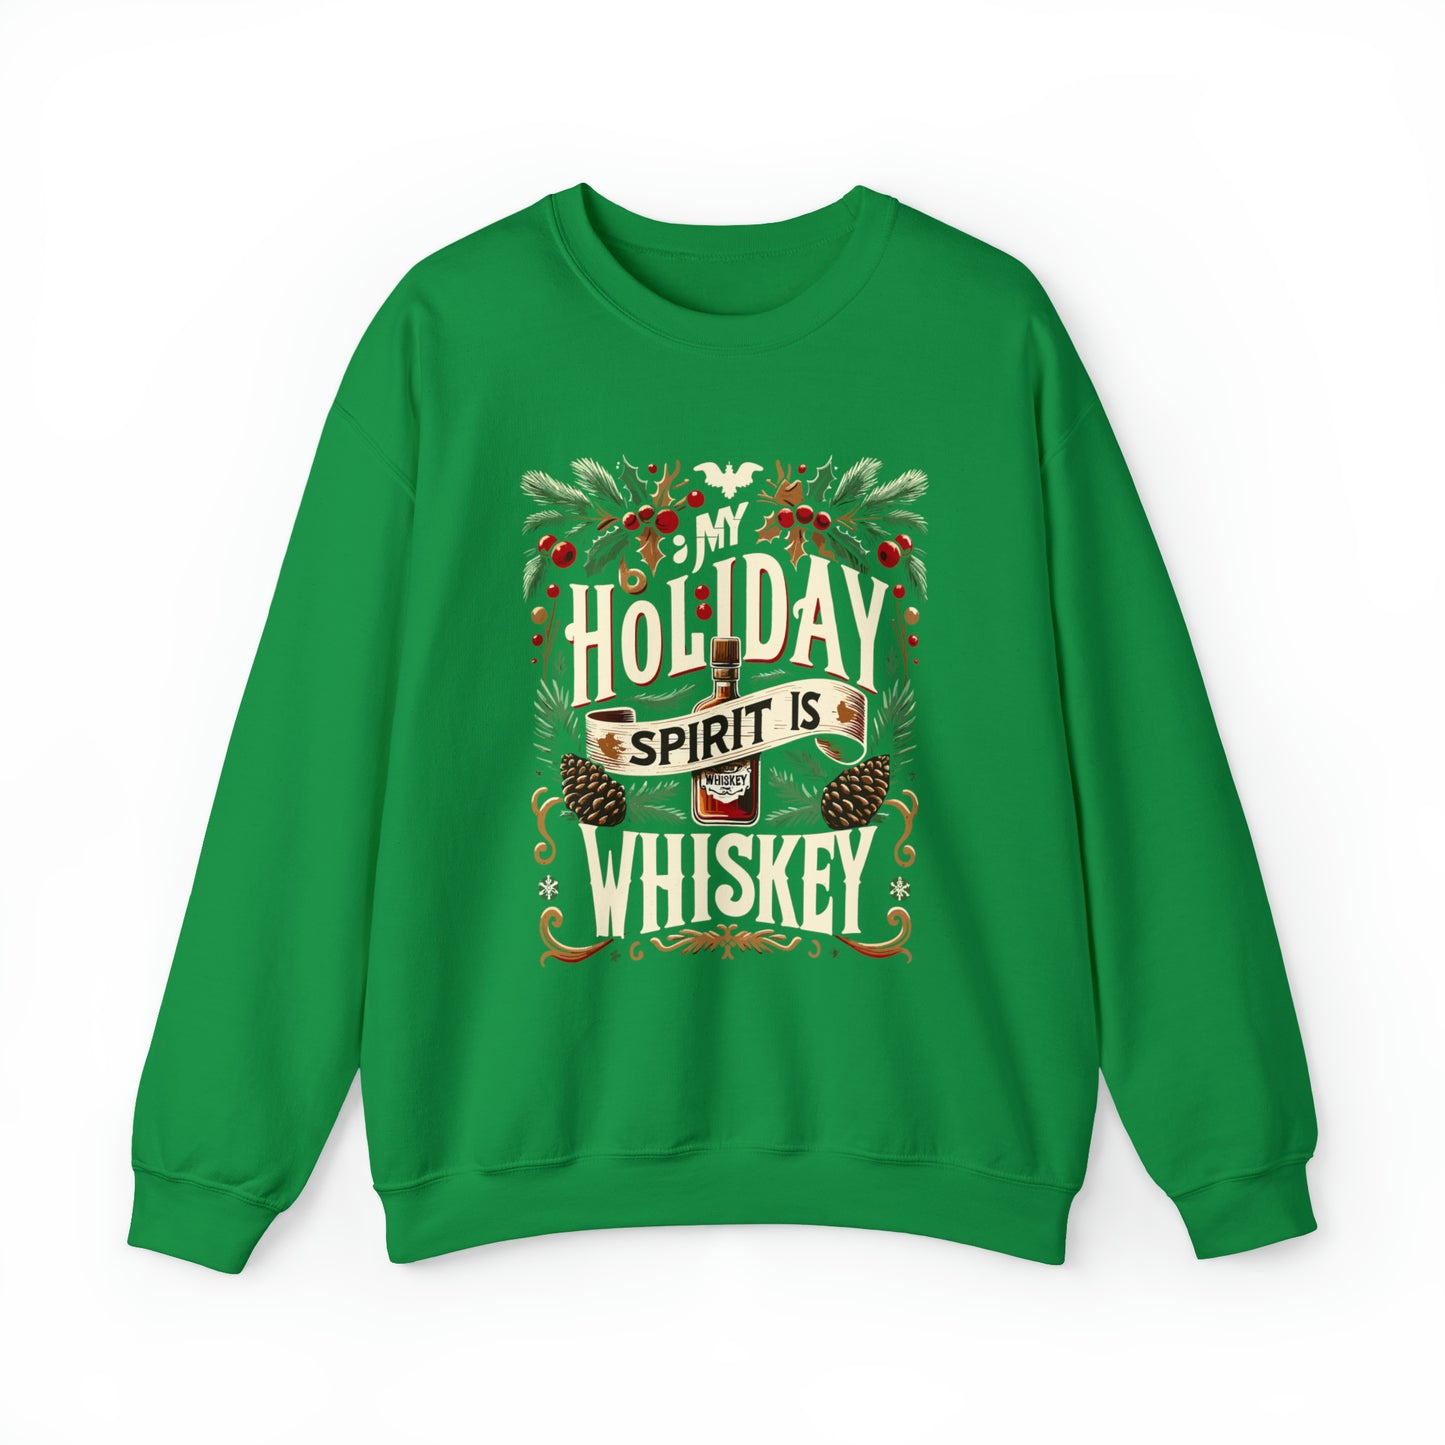 My Holiday Spirit is Whiskey Crewneck Sweatshirt